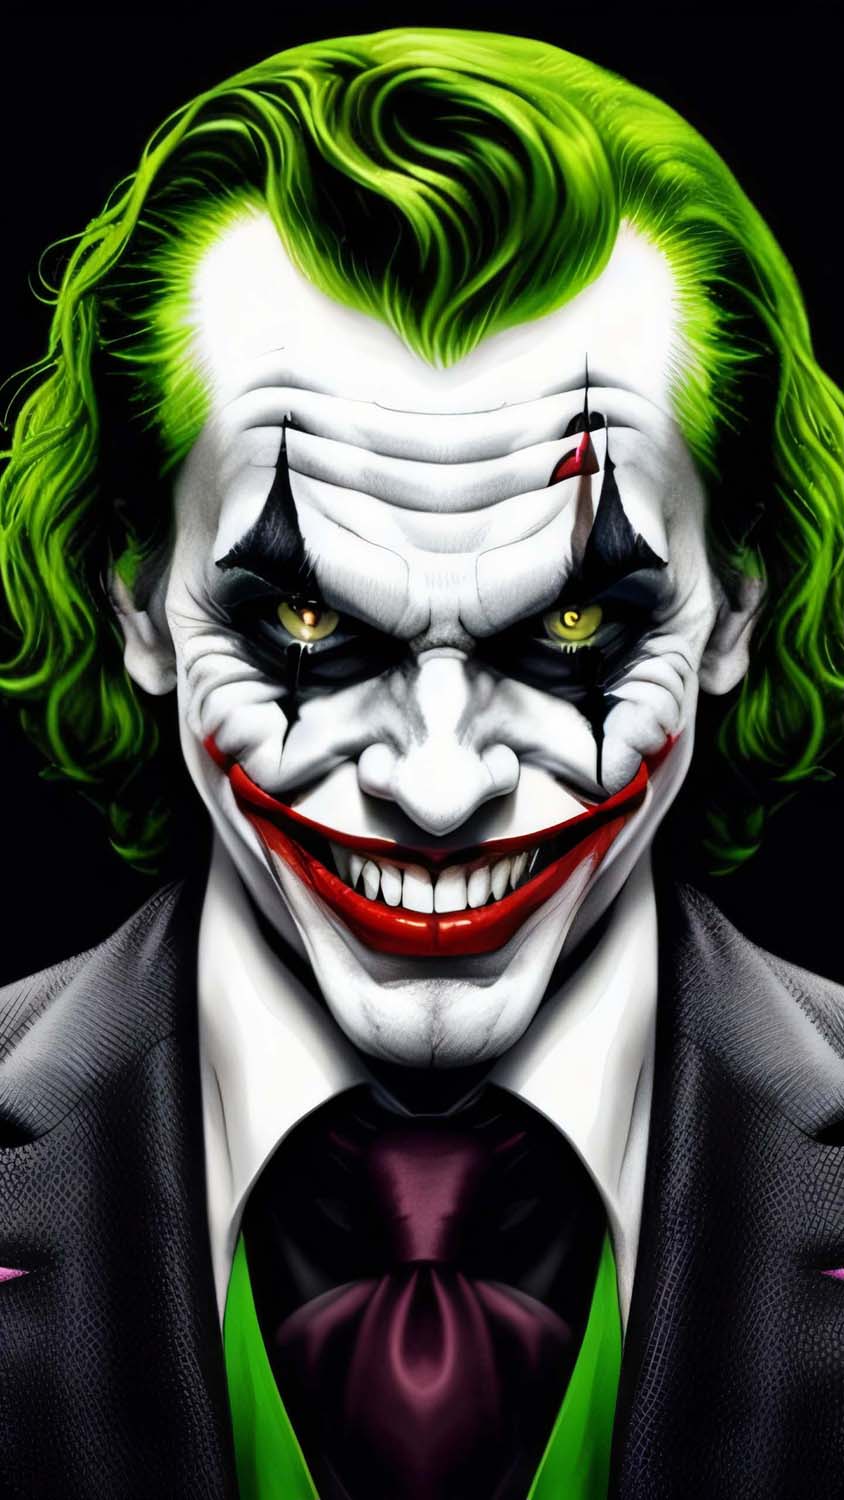 Joker Evil Face iPhone Wallpaper HD - iPhone Wallpapers